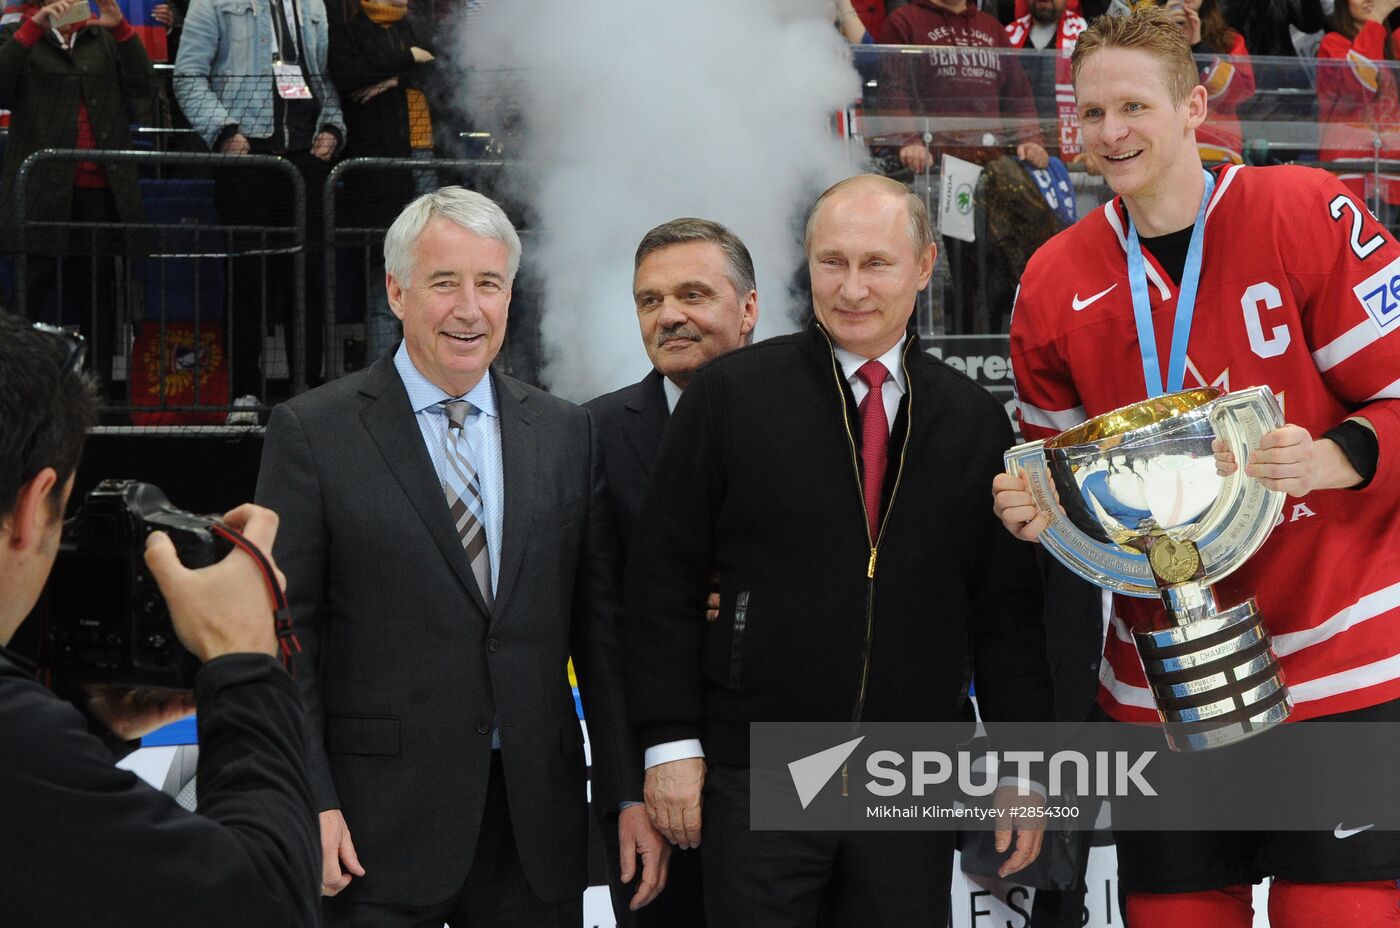 Vladimir Putin attends 2016 IIHF World Championship final match